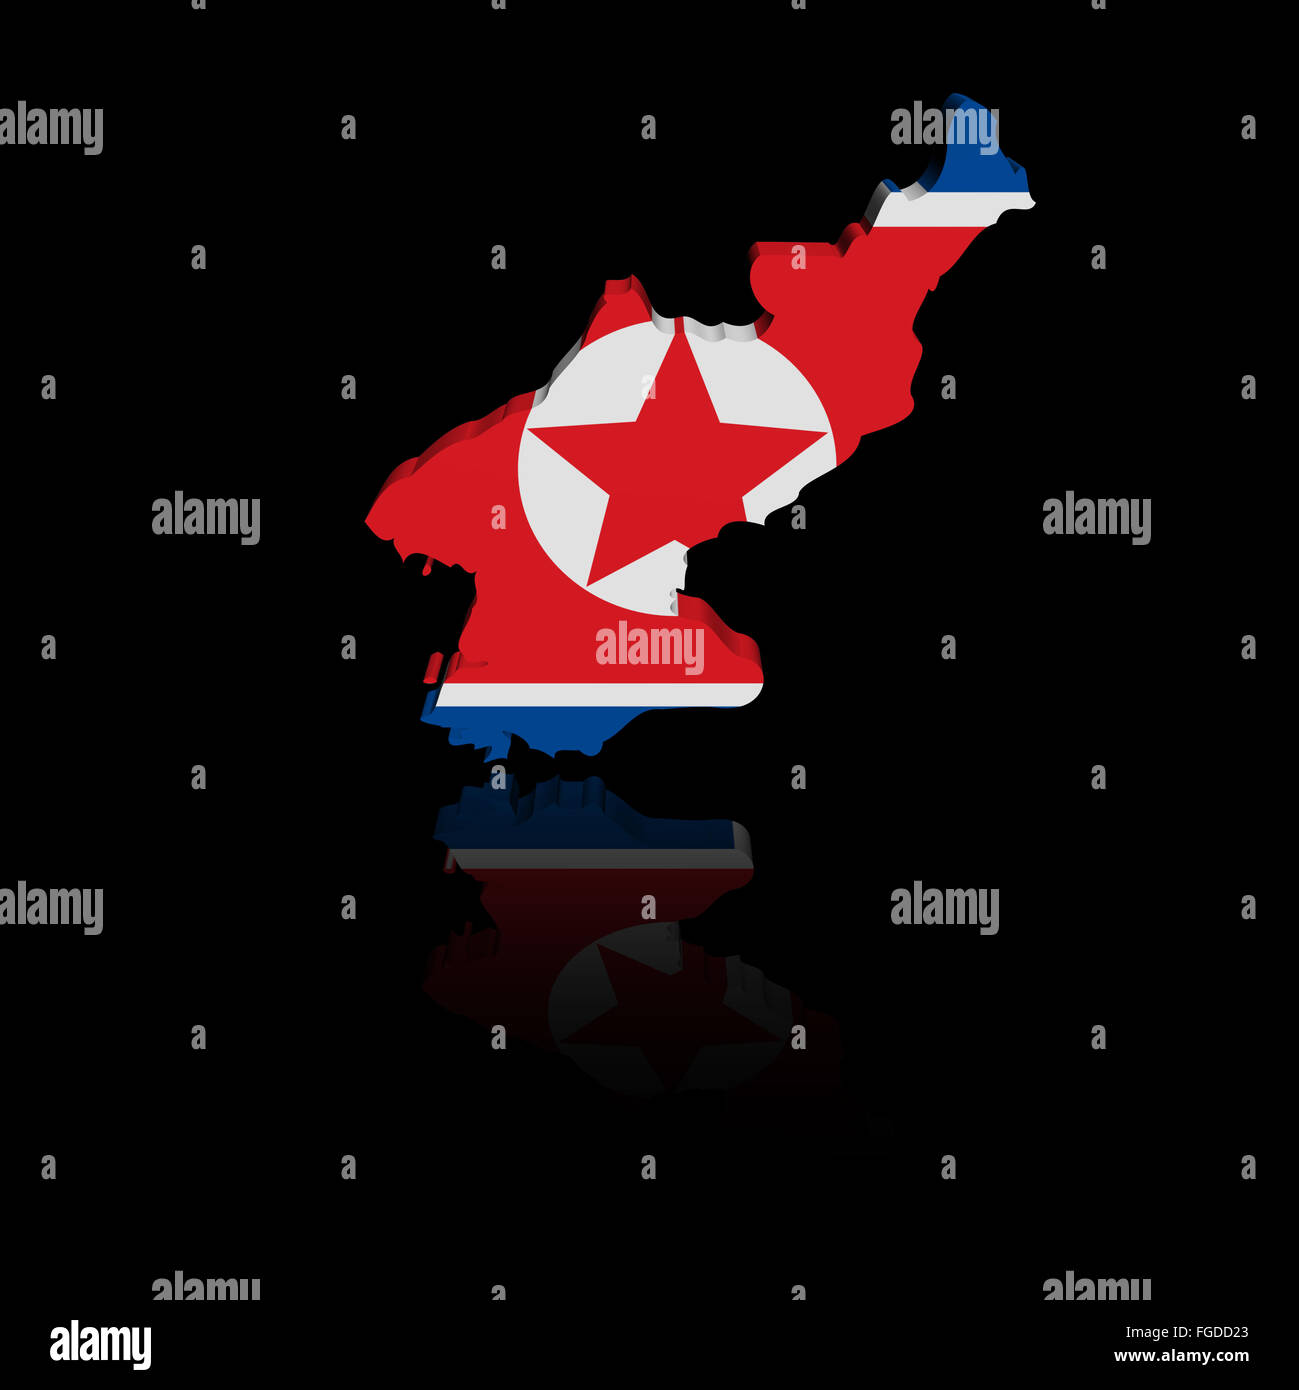 North Korea map flag with reflection illustration Stock Photo - Alamy